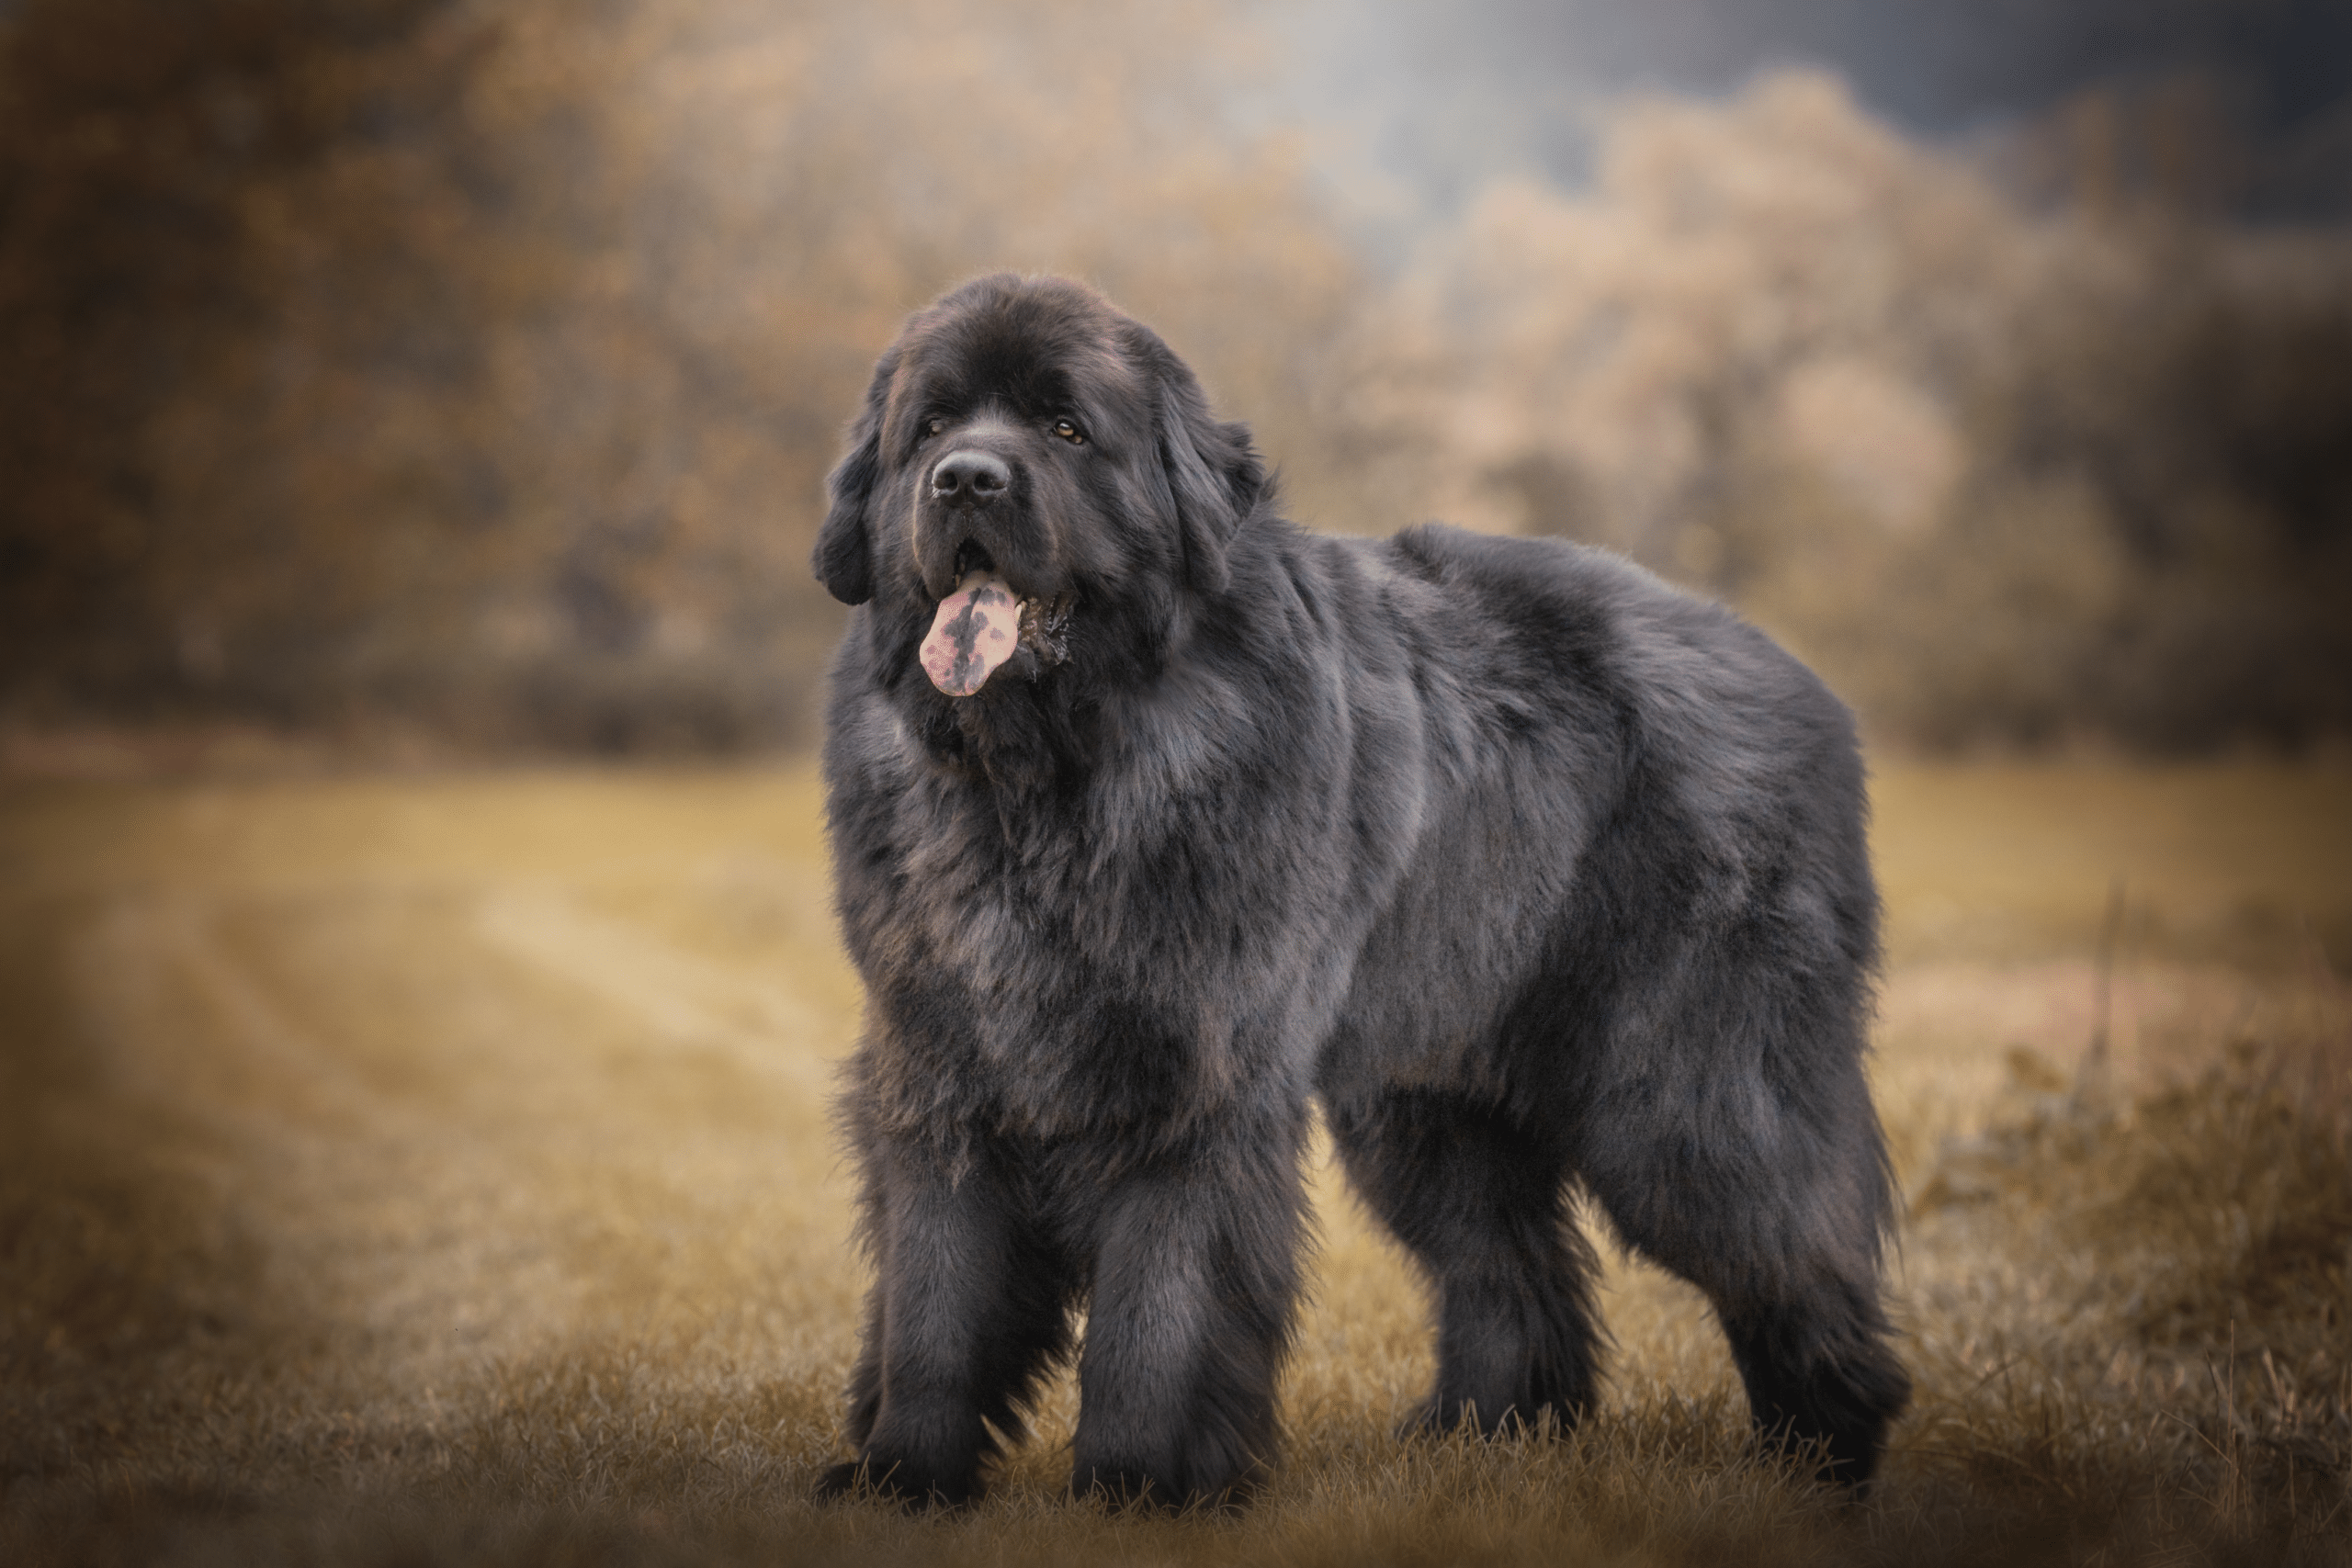 Shutterstock, Newfoundland, big dogs, guard dog, tall dog